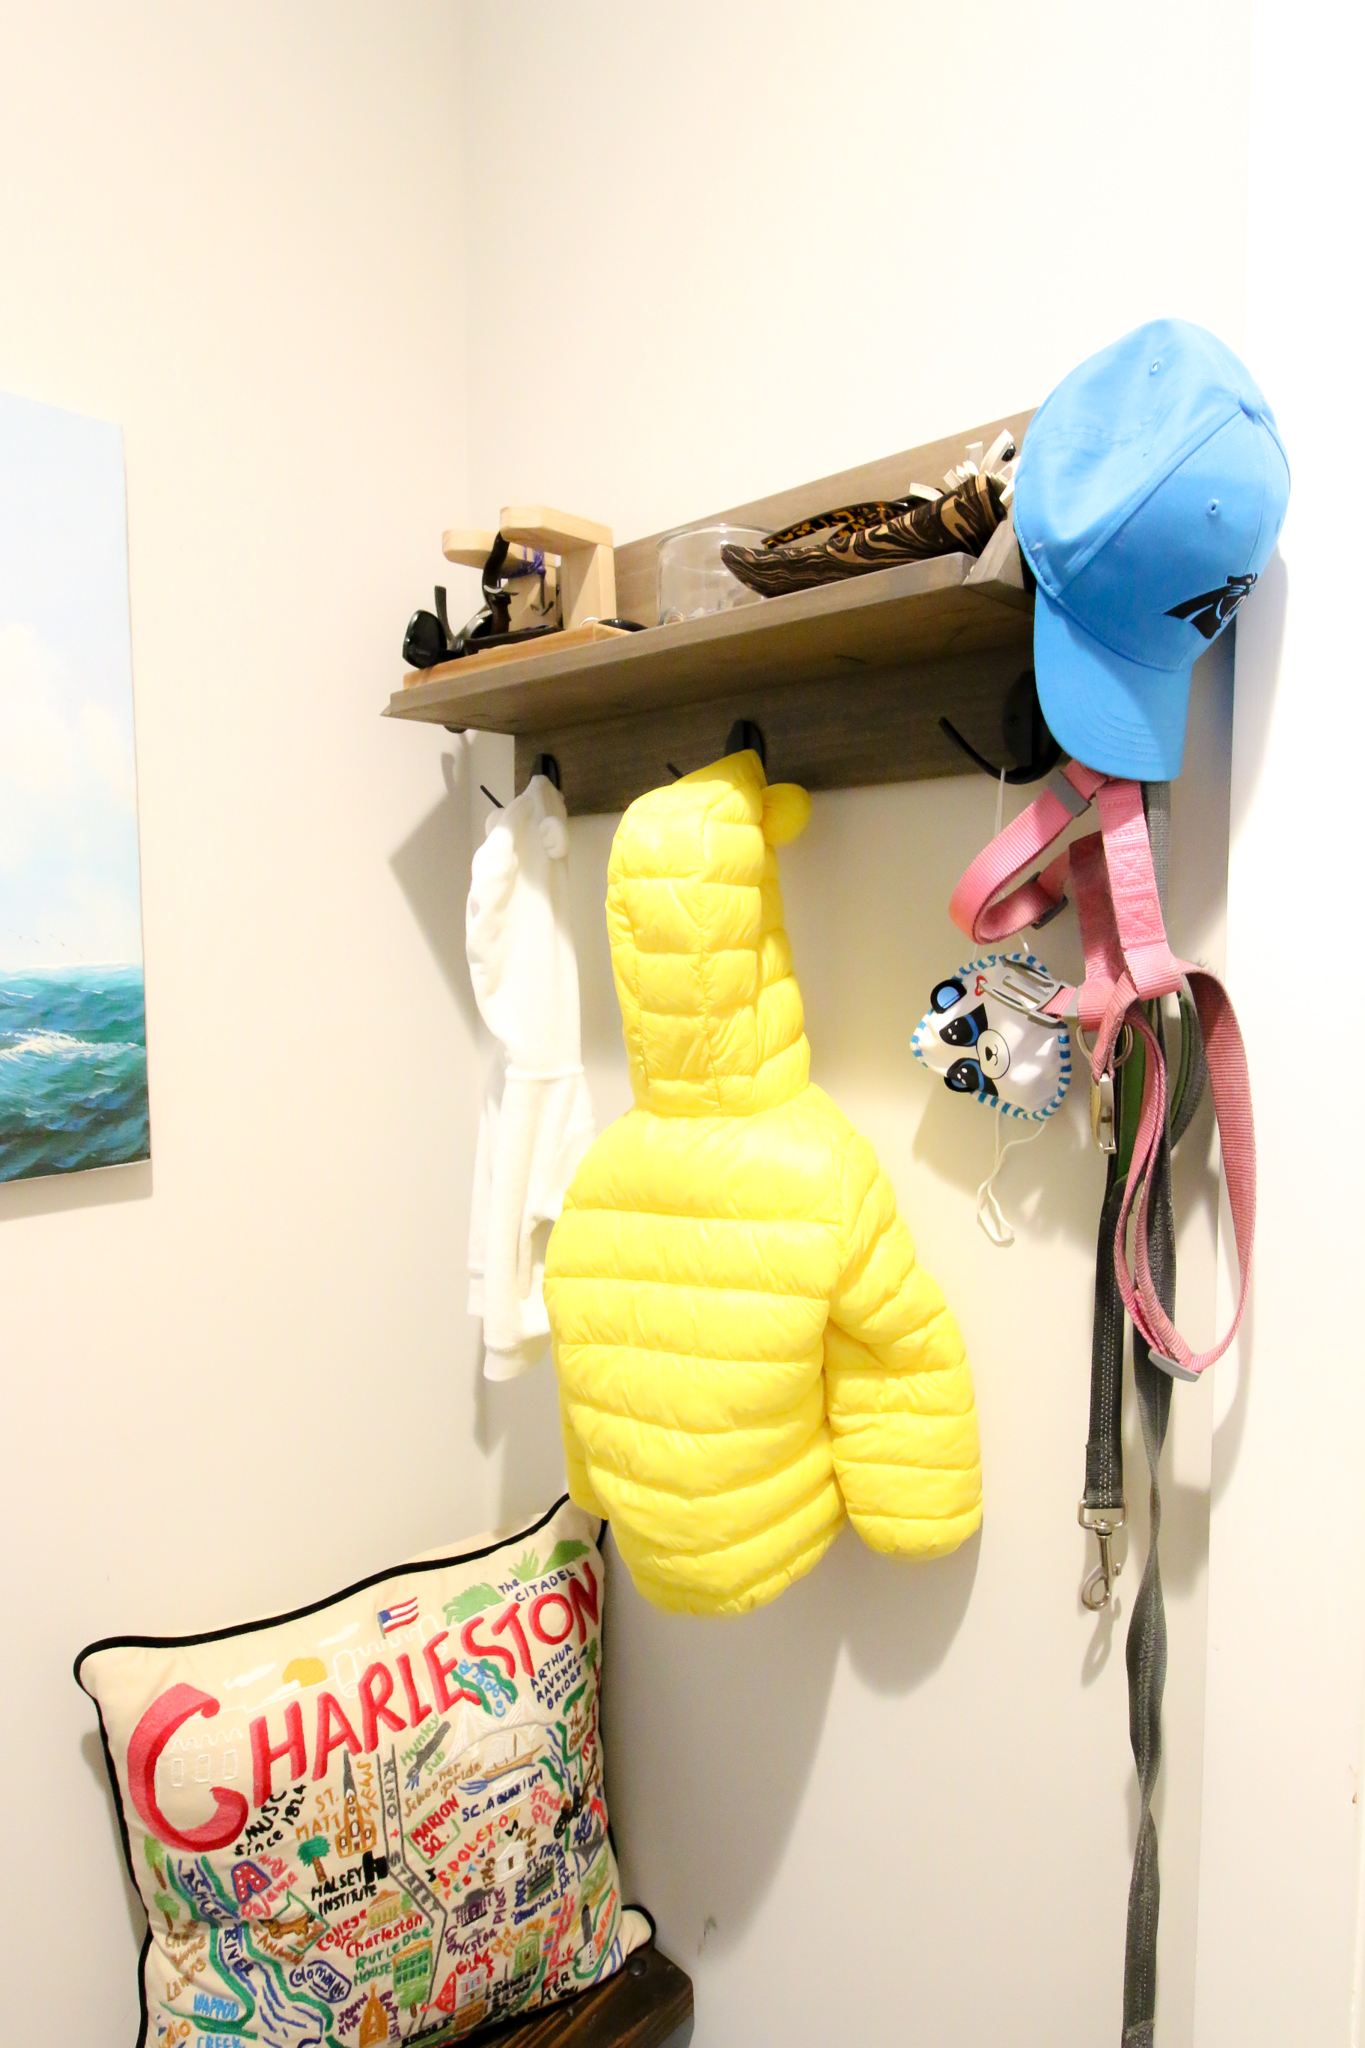 Montessori Entry Mirror - Entryway Shelf Storage Rack for Kids - Wall  Mounted